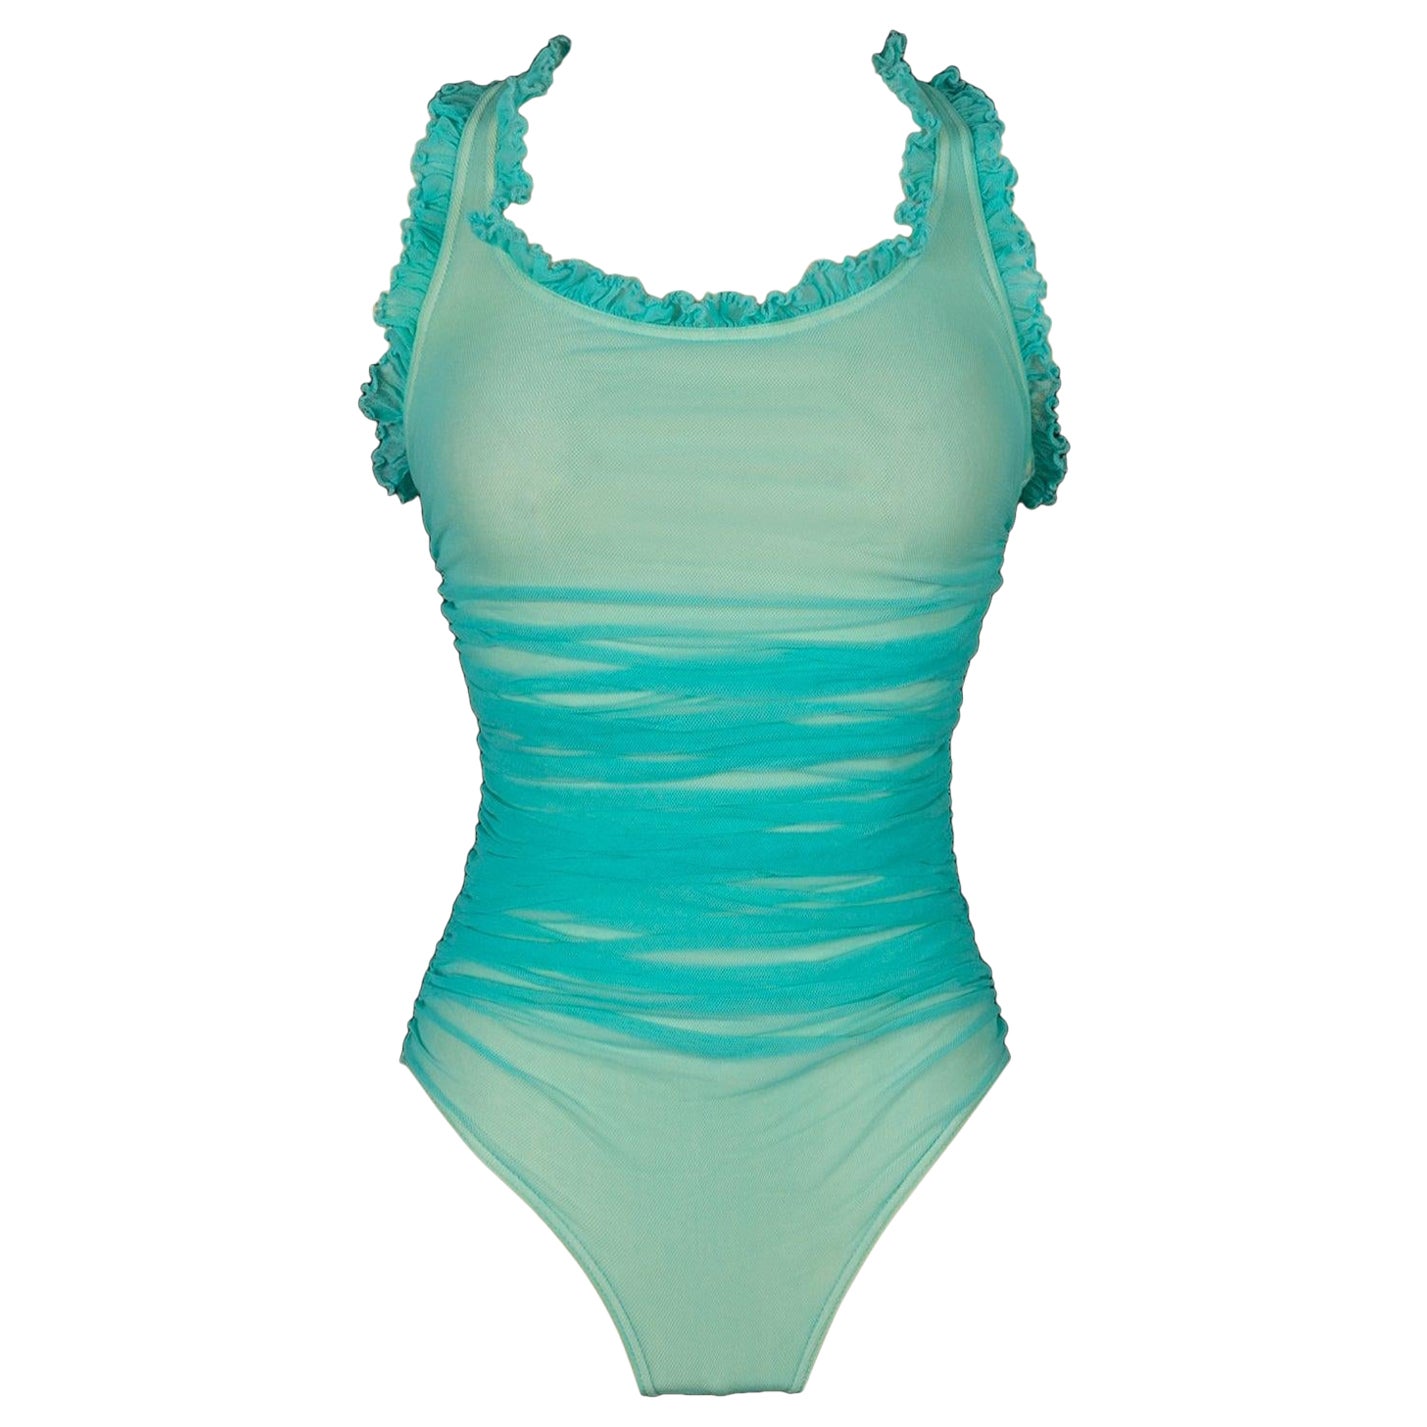 Chanel Turquoise Swimsuit / Bodysuit, 2001